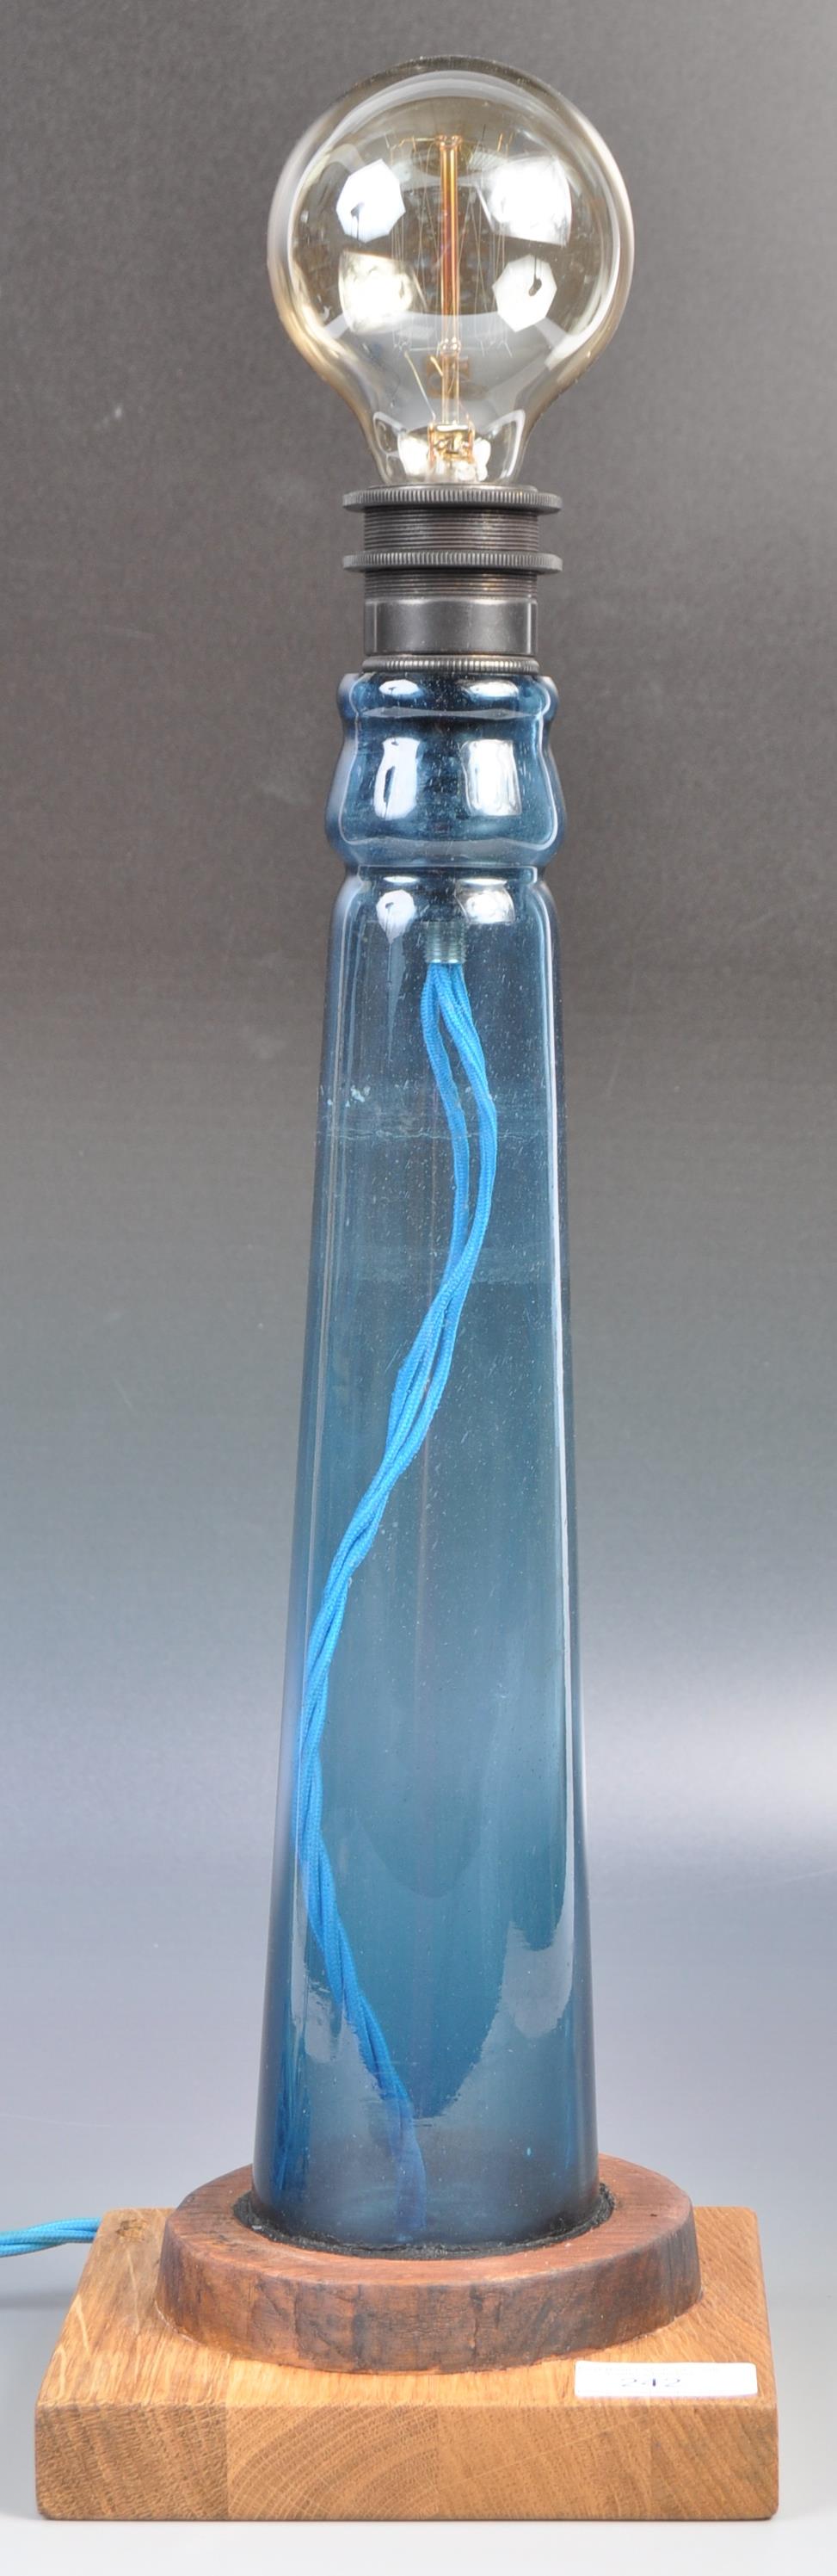 RETRO VINTAGE UPCYCLED BLUE GLASS VASE TABLE LAMP LIGHT